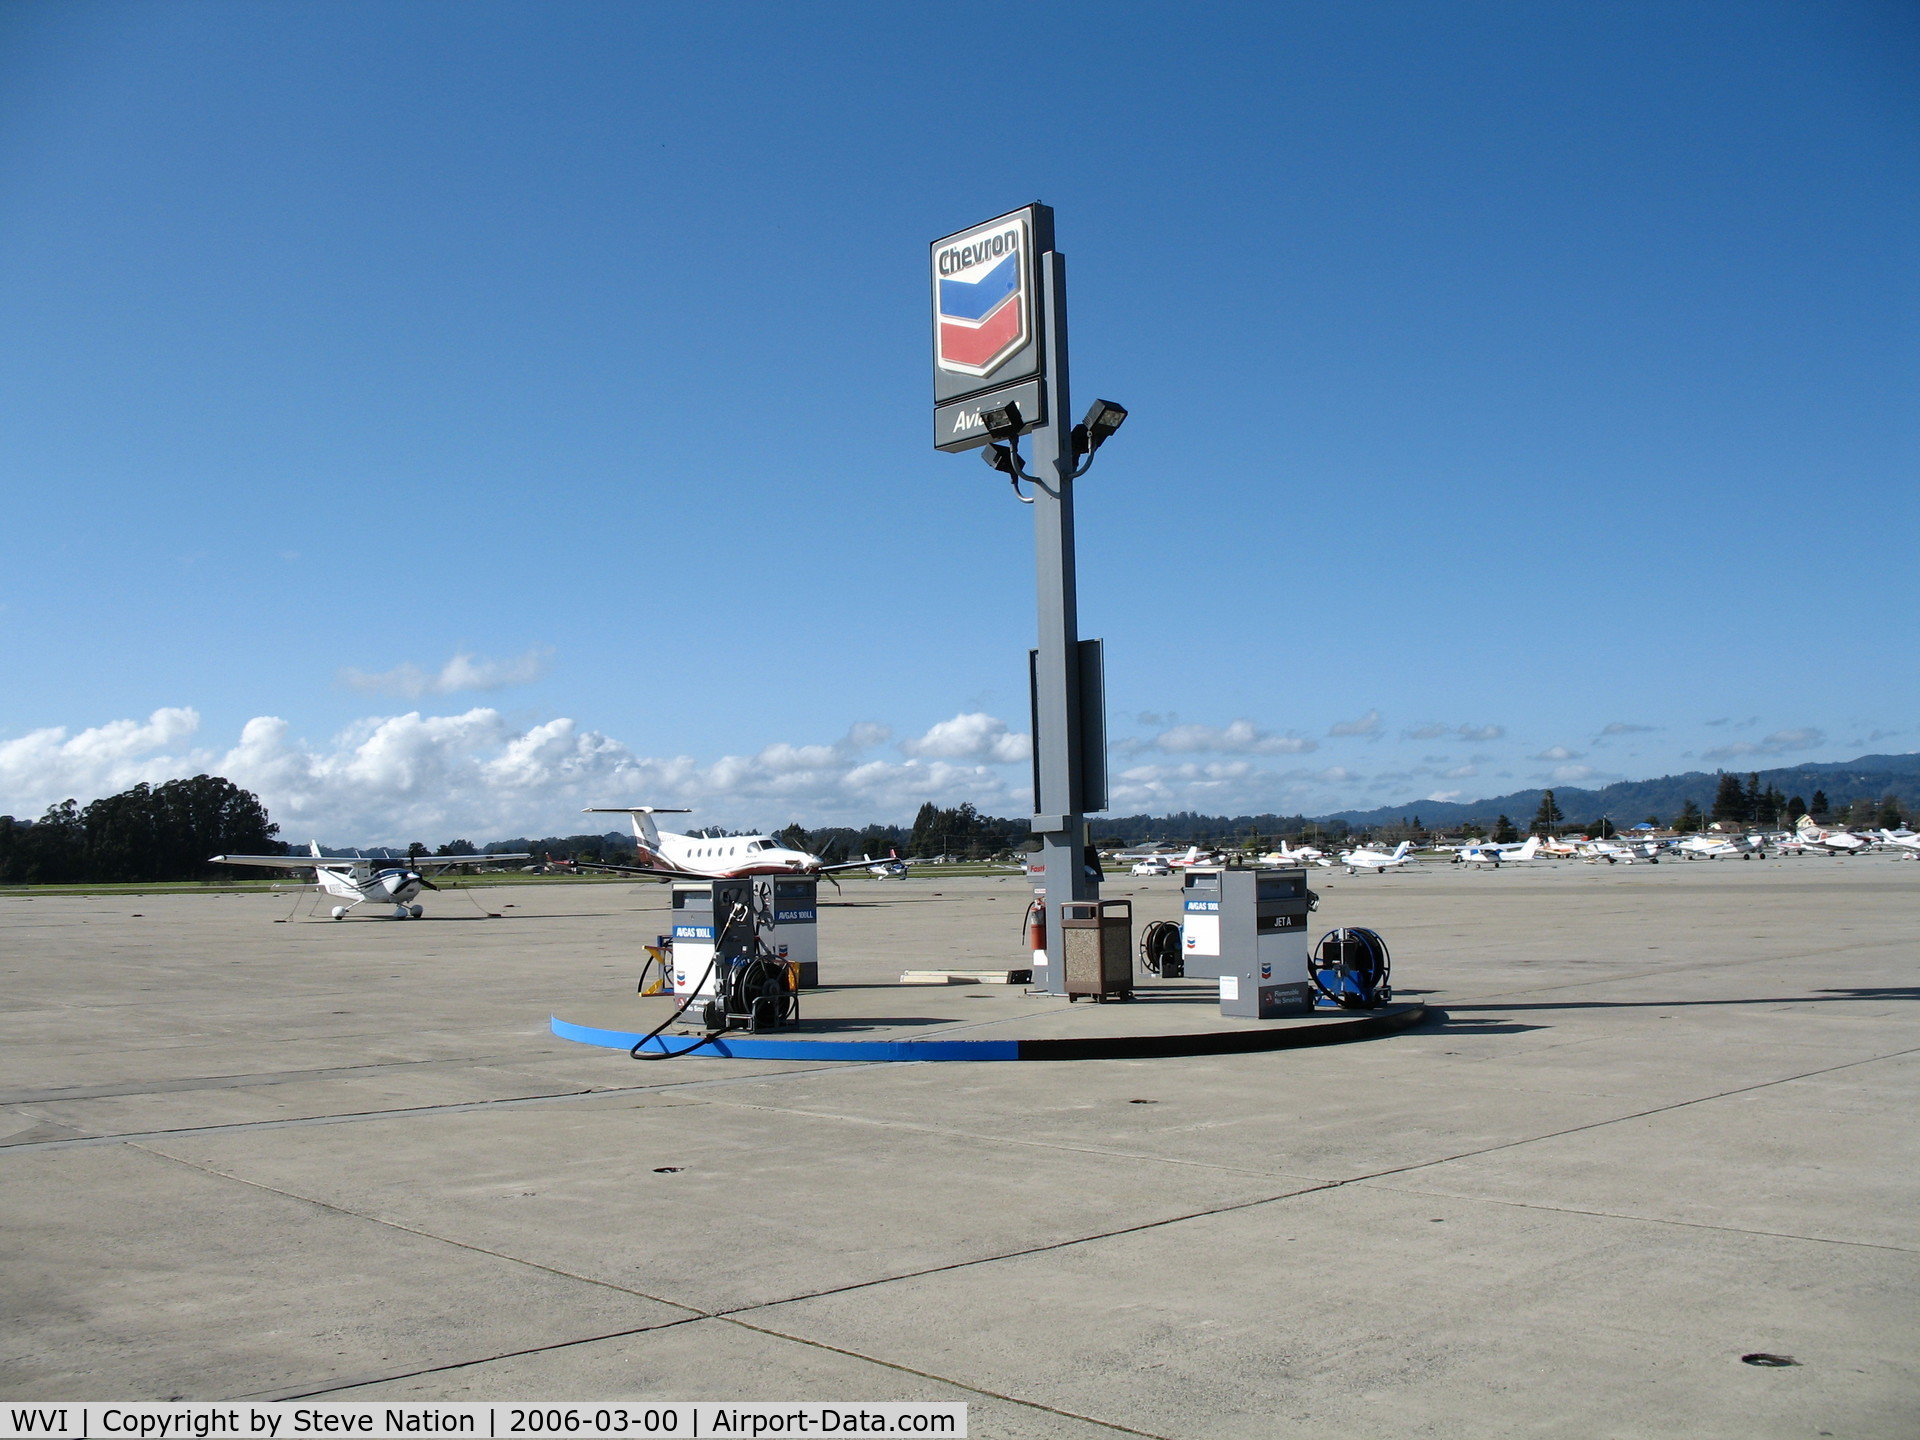 Watsonville Municipal Airport (WVI) - Gas pumps at Watsonville Municipal Airport, CA